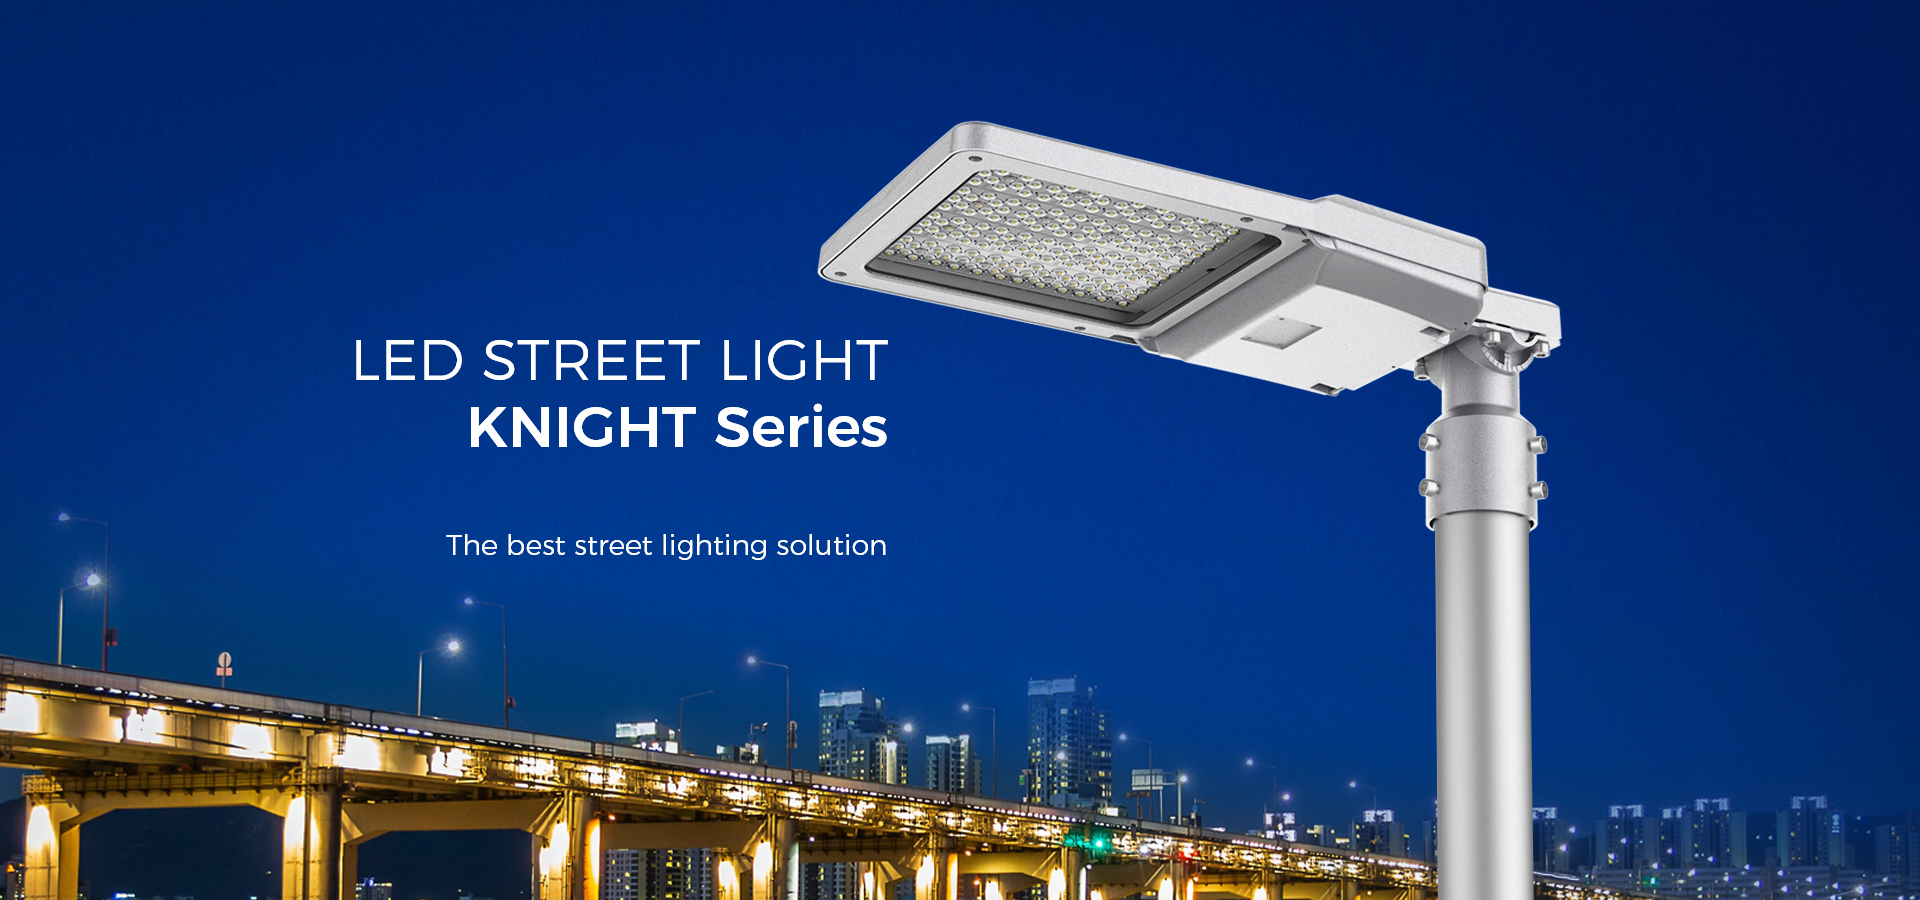 KNIGHT series led street light